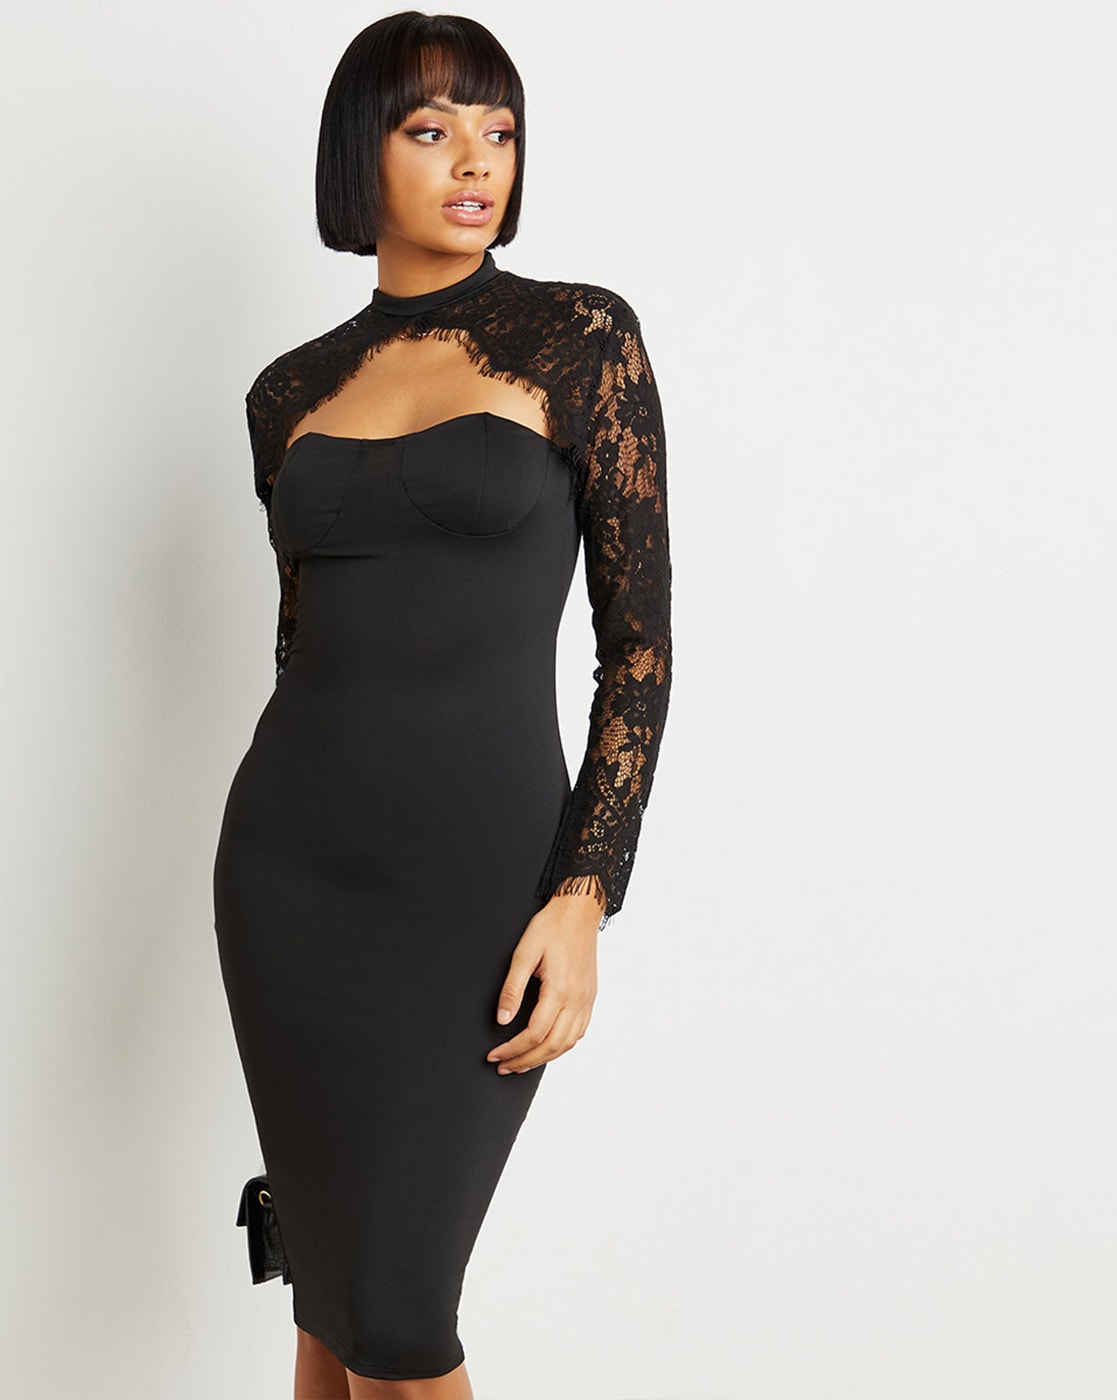 Black Dress  Buy Black Dress online in India